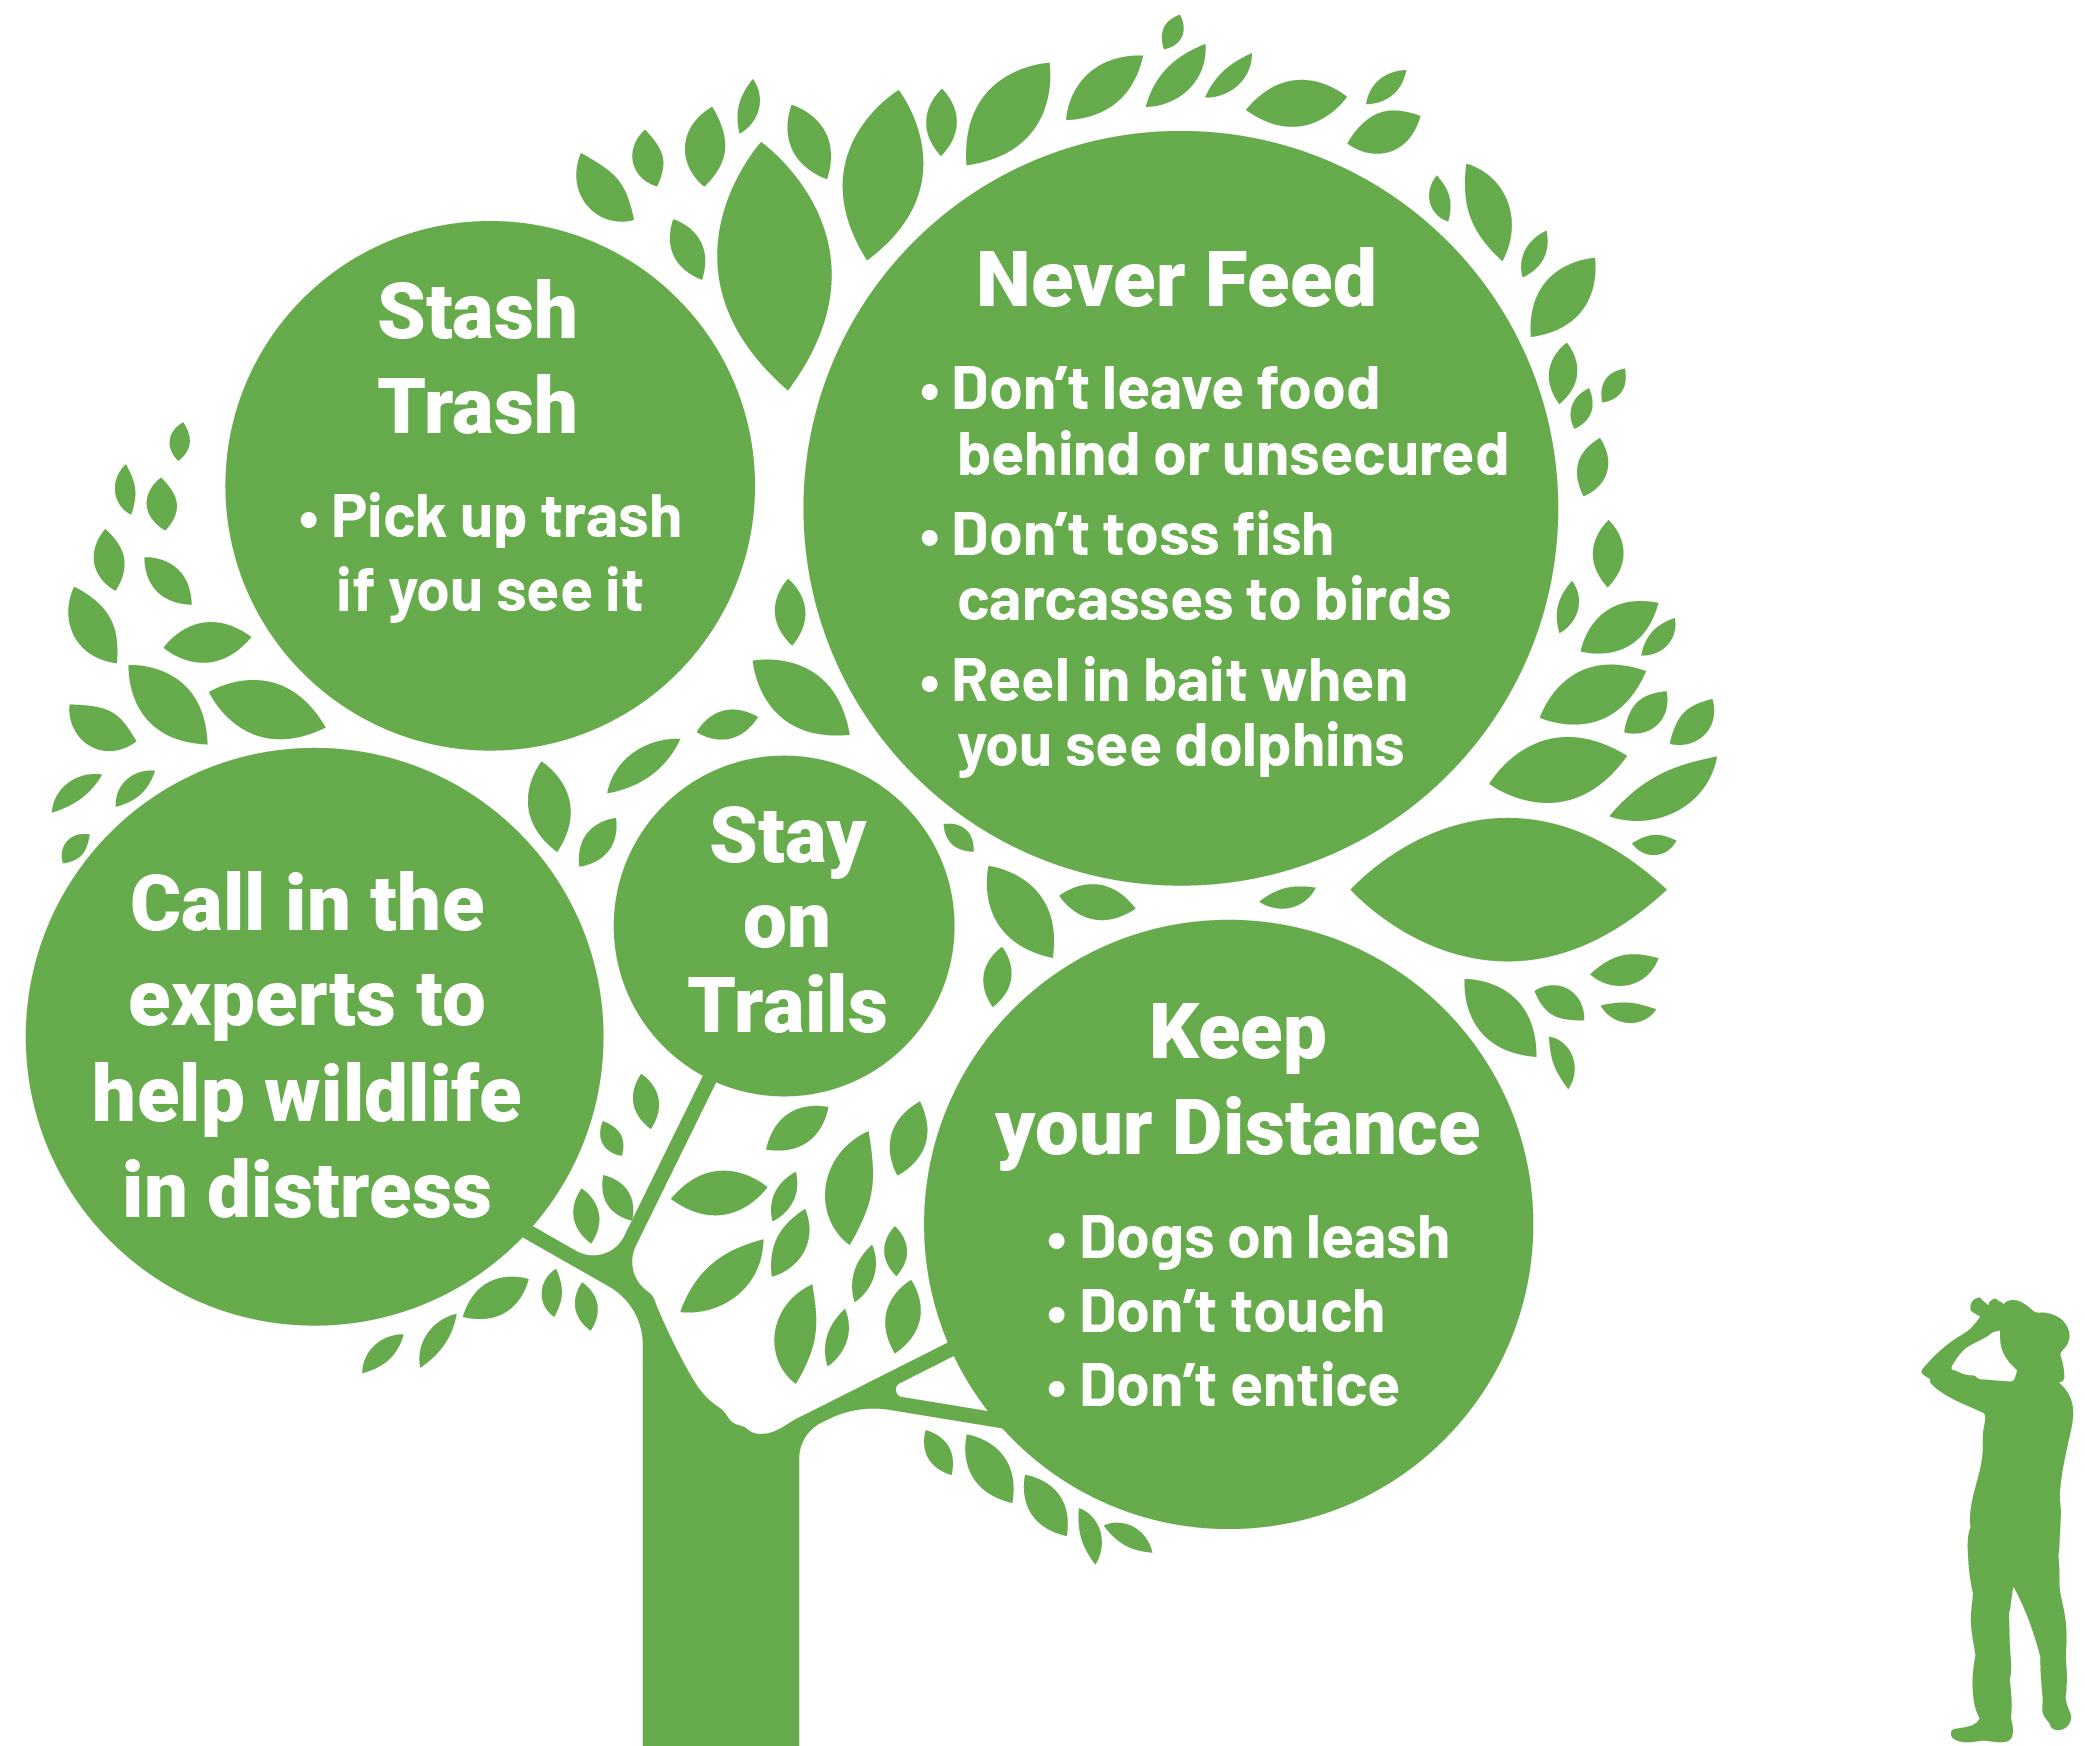 Tips for keeping wildlife safe